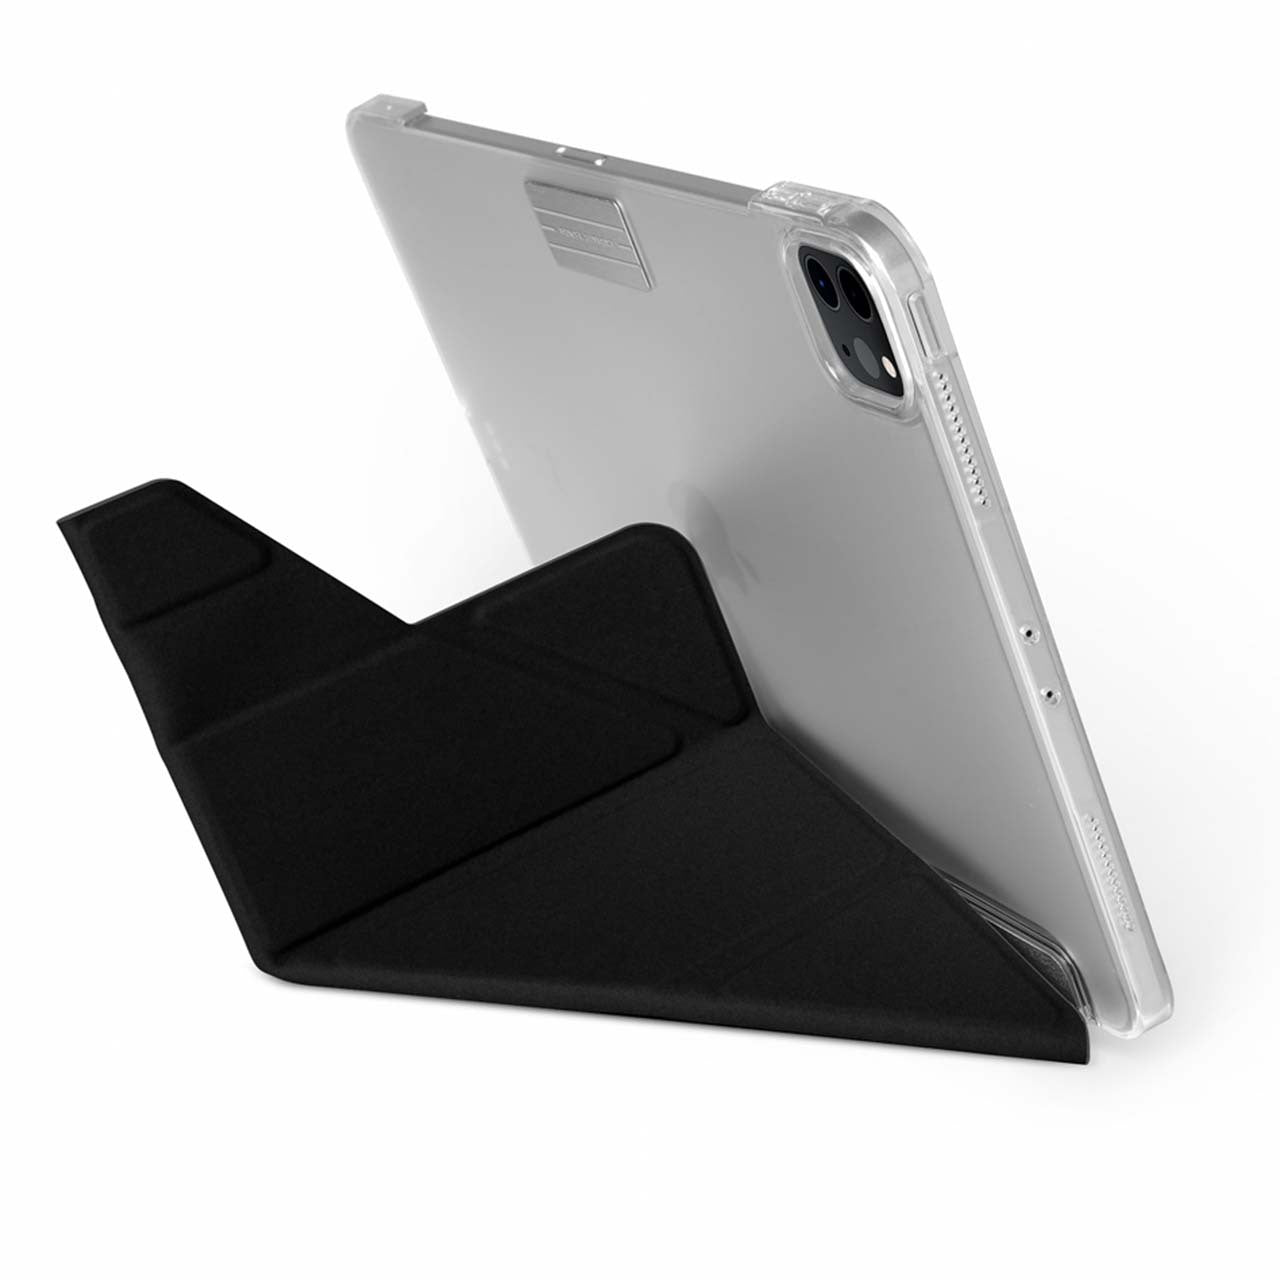 Air Jacket Folio Transparent Case for iPad Pro 11 (3rd Gen) - Grey